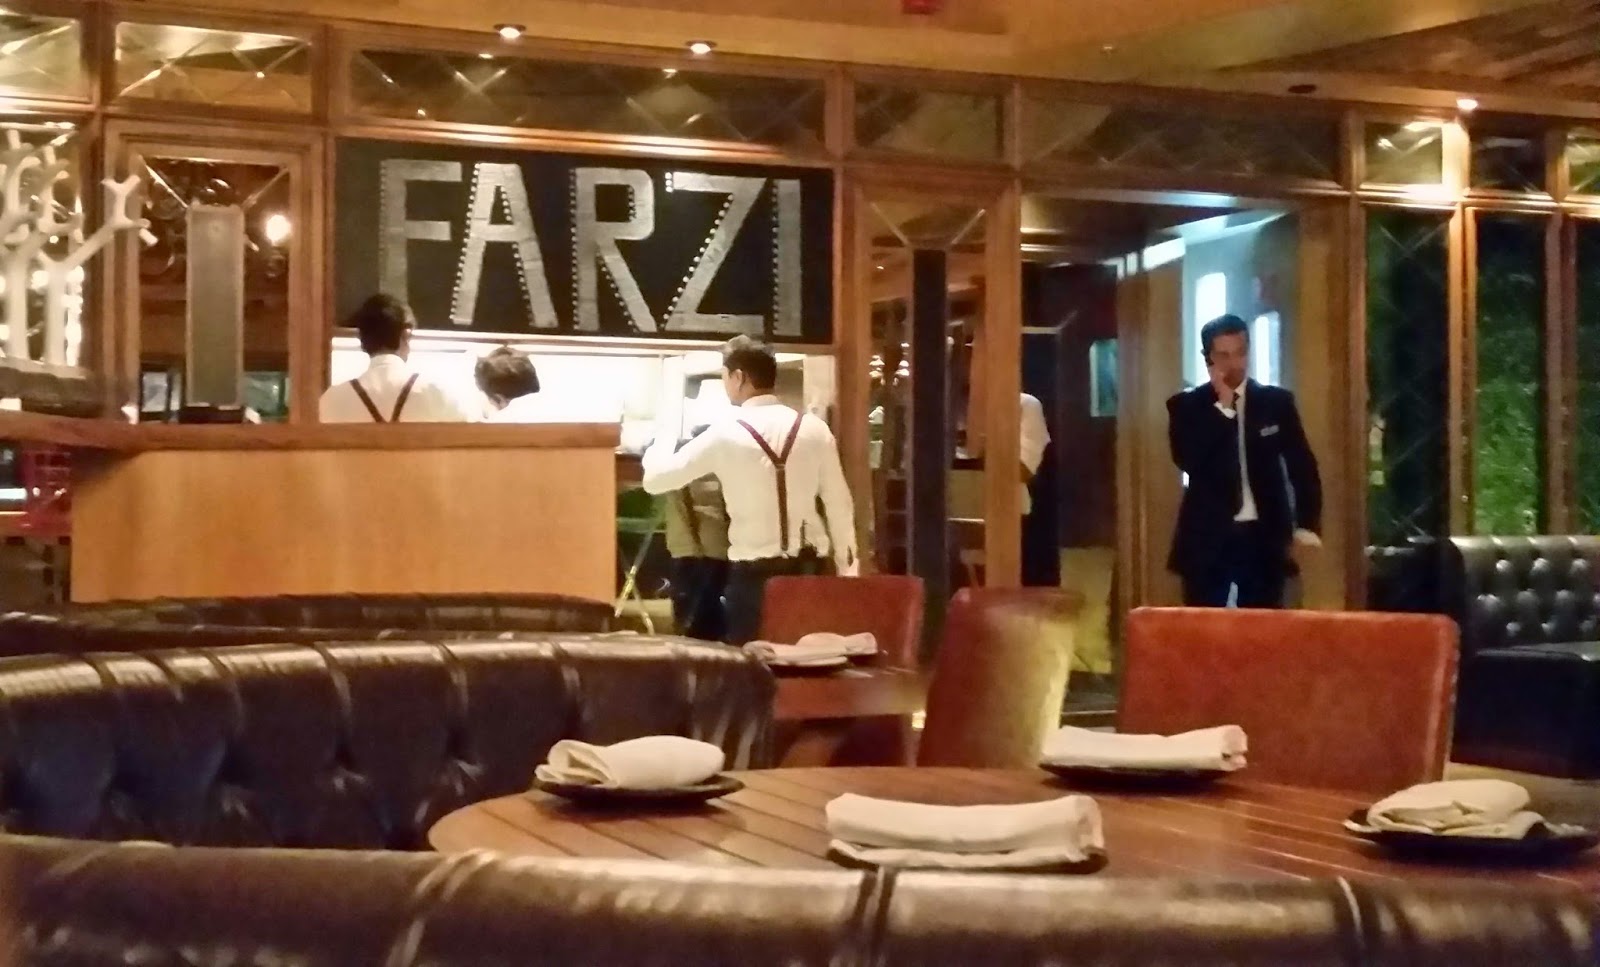 Farzi Cafe Interiors